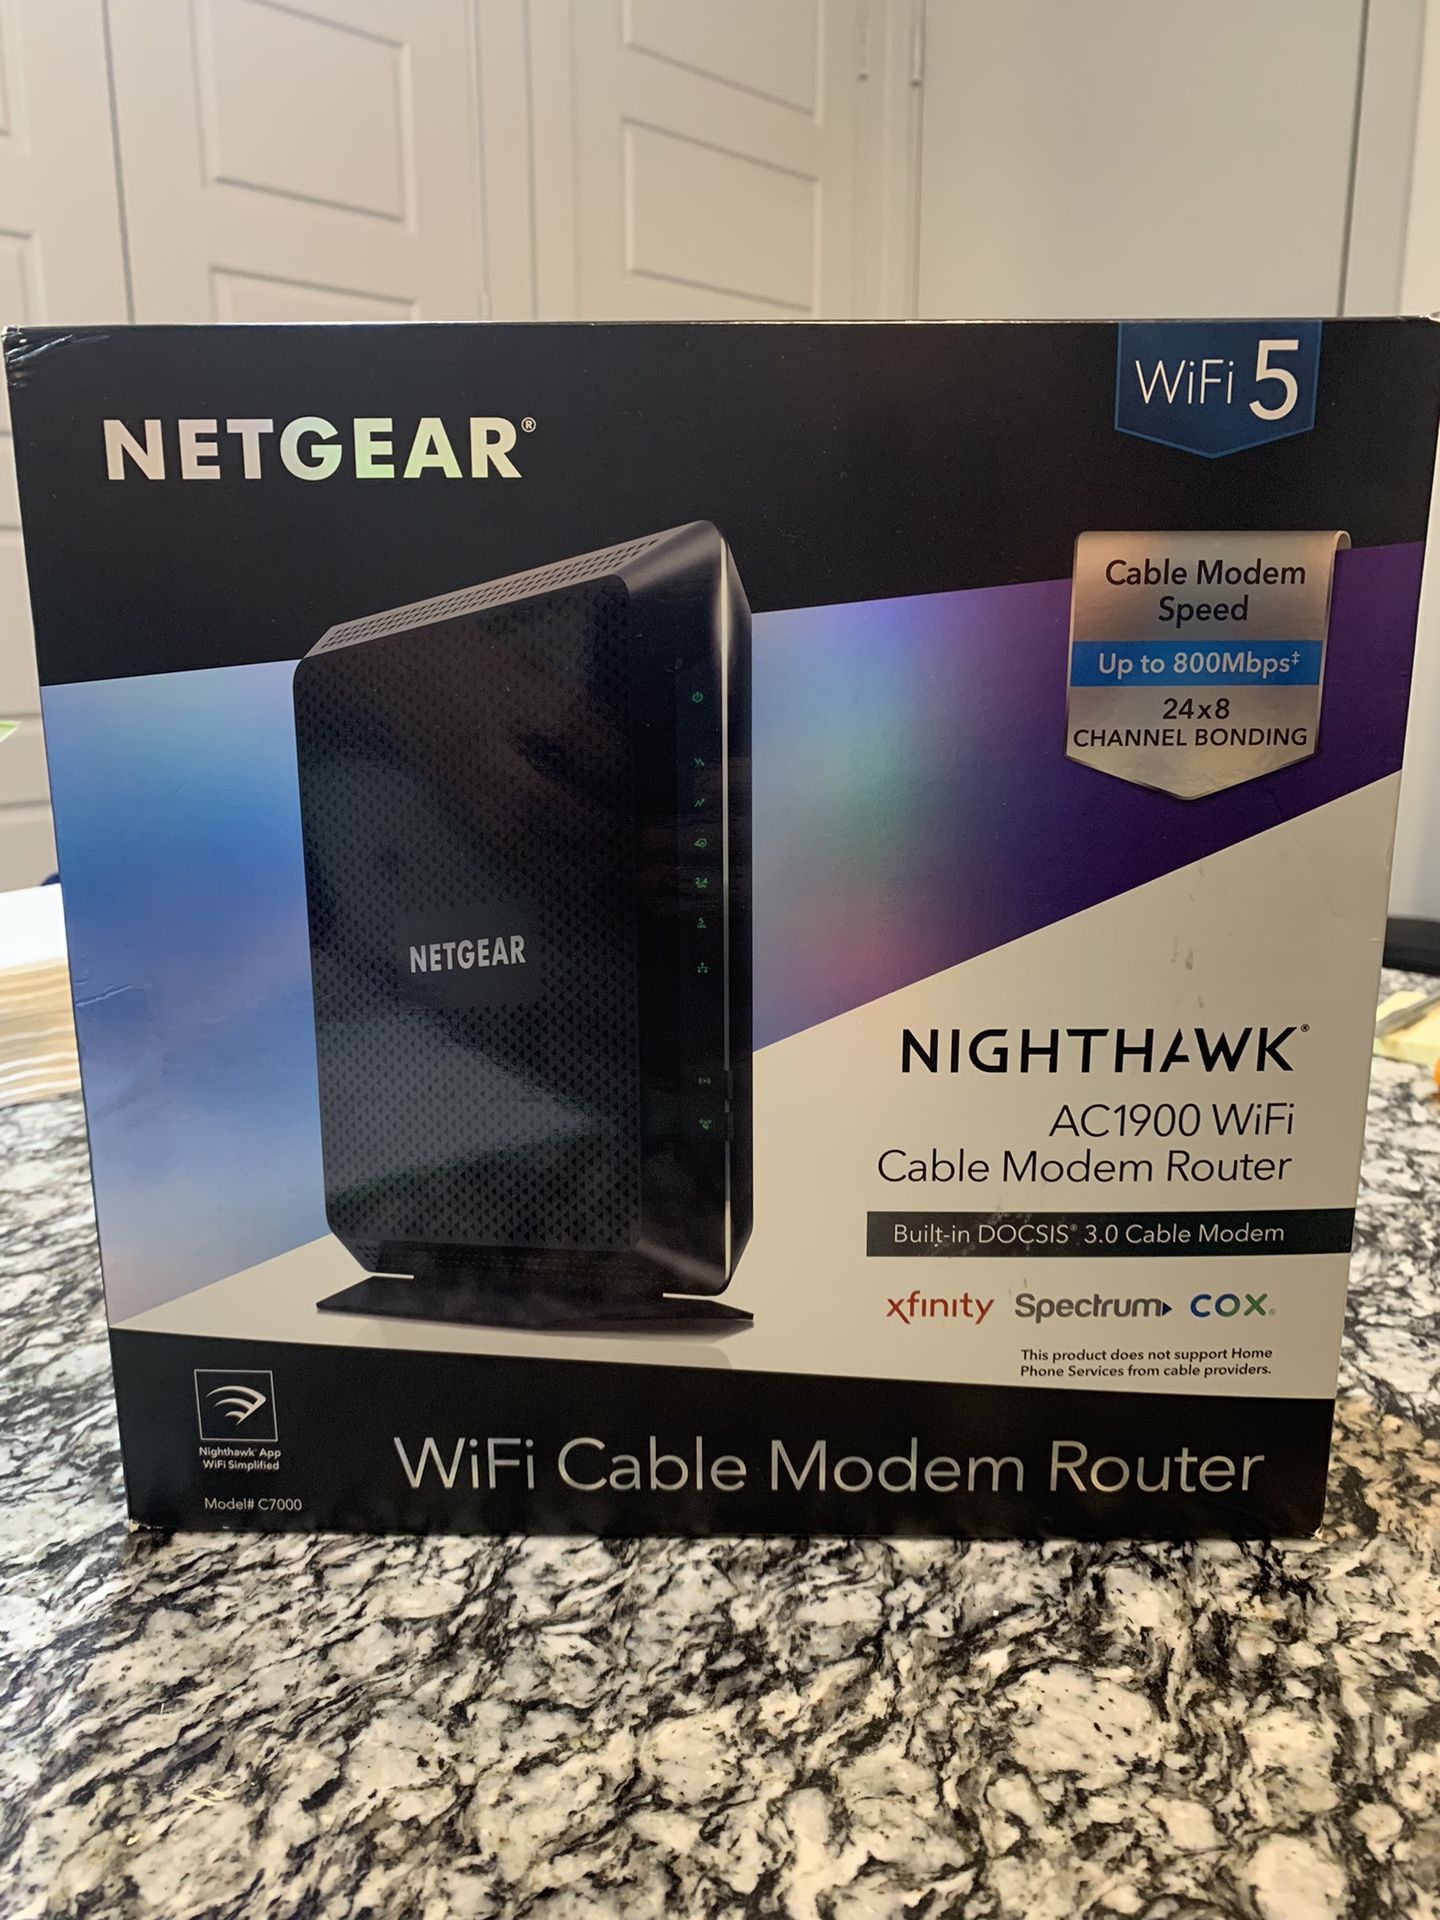 NETGEAR Nighthawk WiFi Modem Router